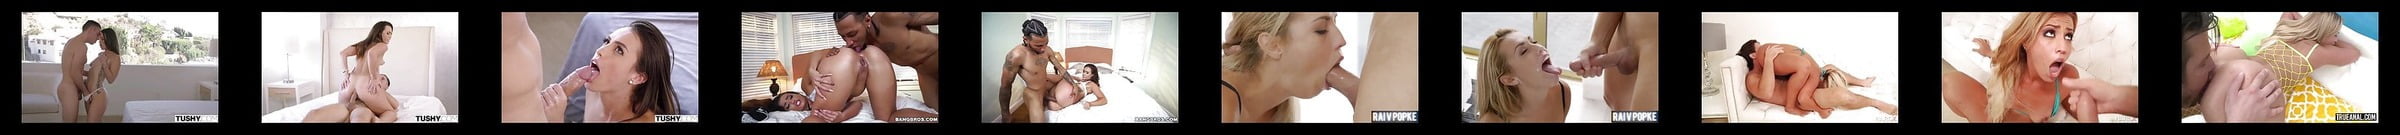 Kelsi Monroe Free Porn Star Videos 263 Xhamster